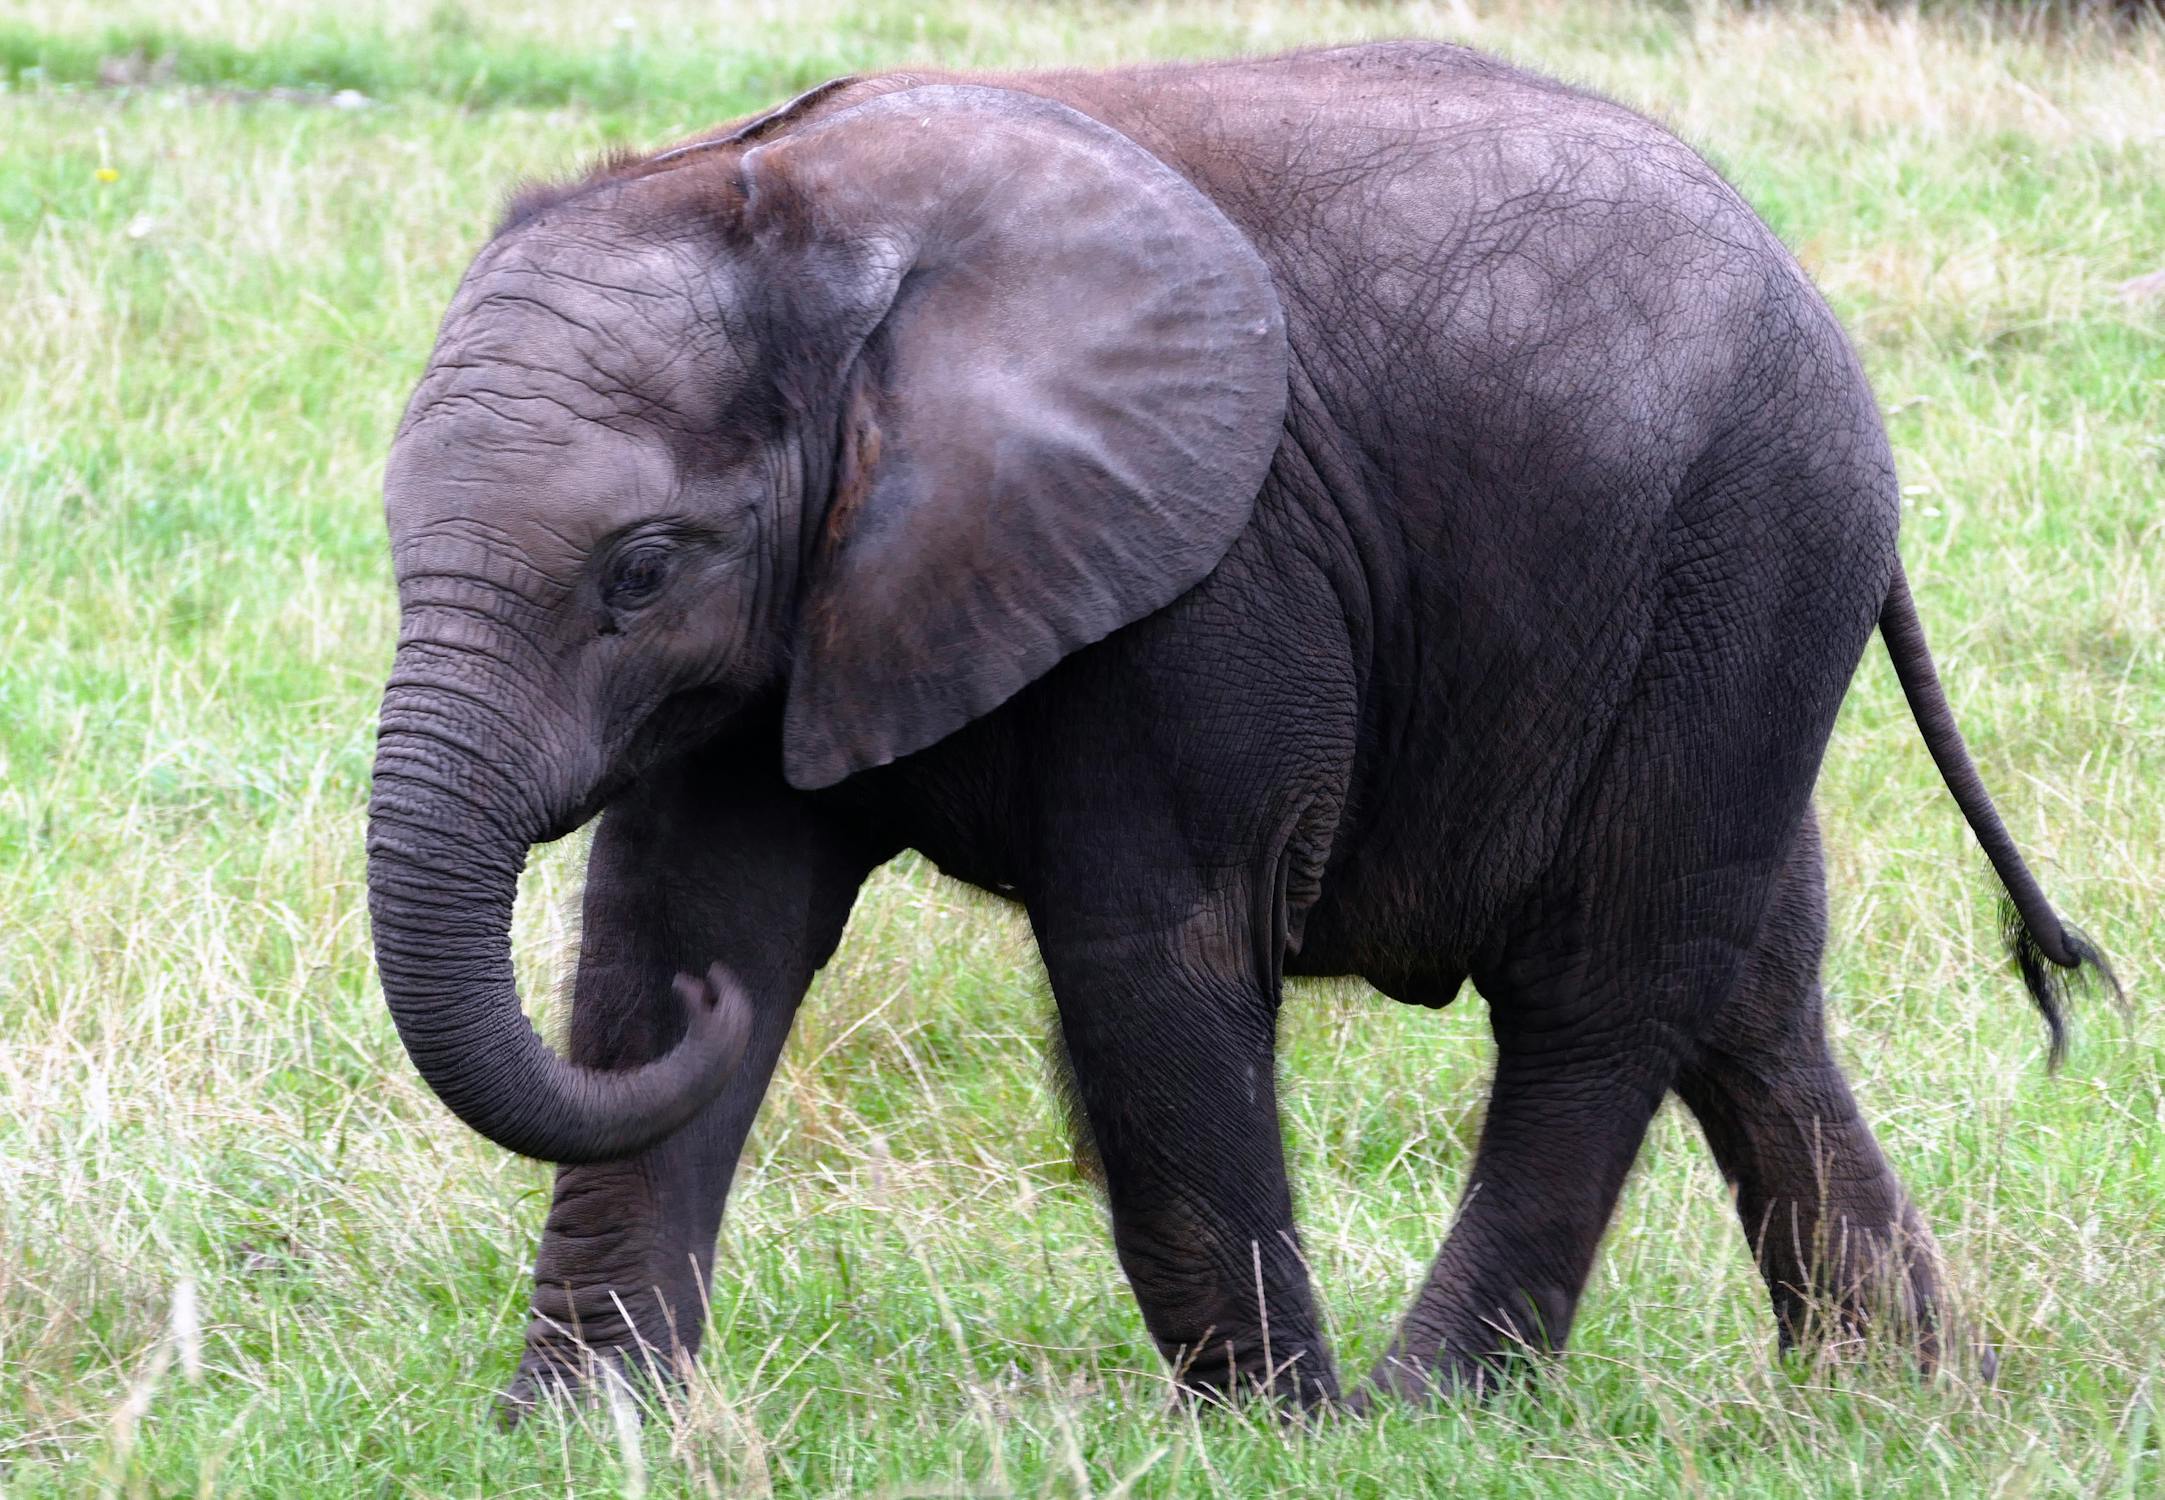 Elephant Photo by Anthony : ) from Pexels: https://www.pexels.com/photo/elephant-calf-133394/